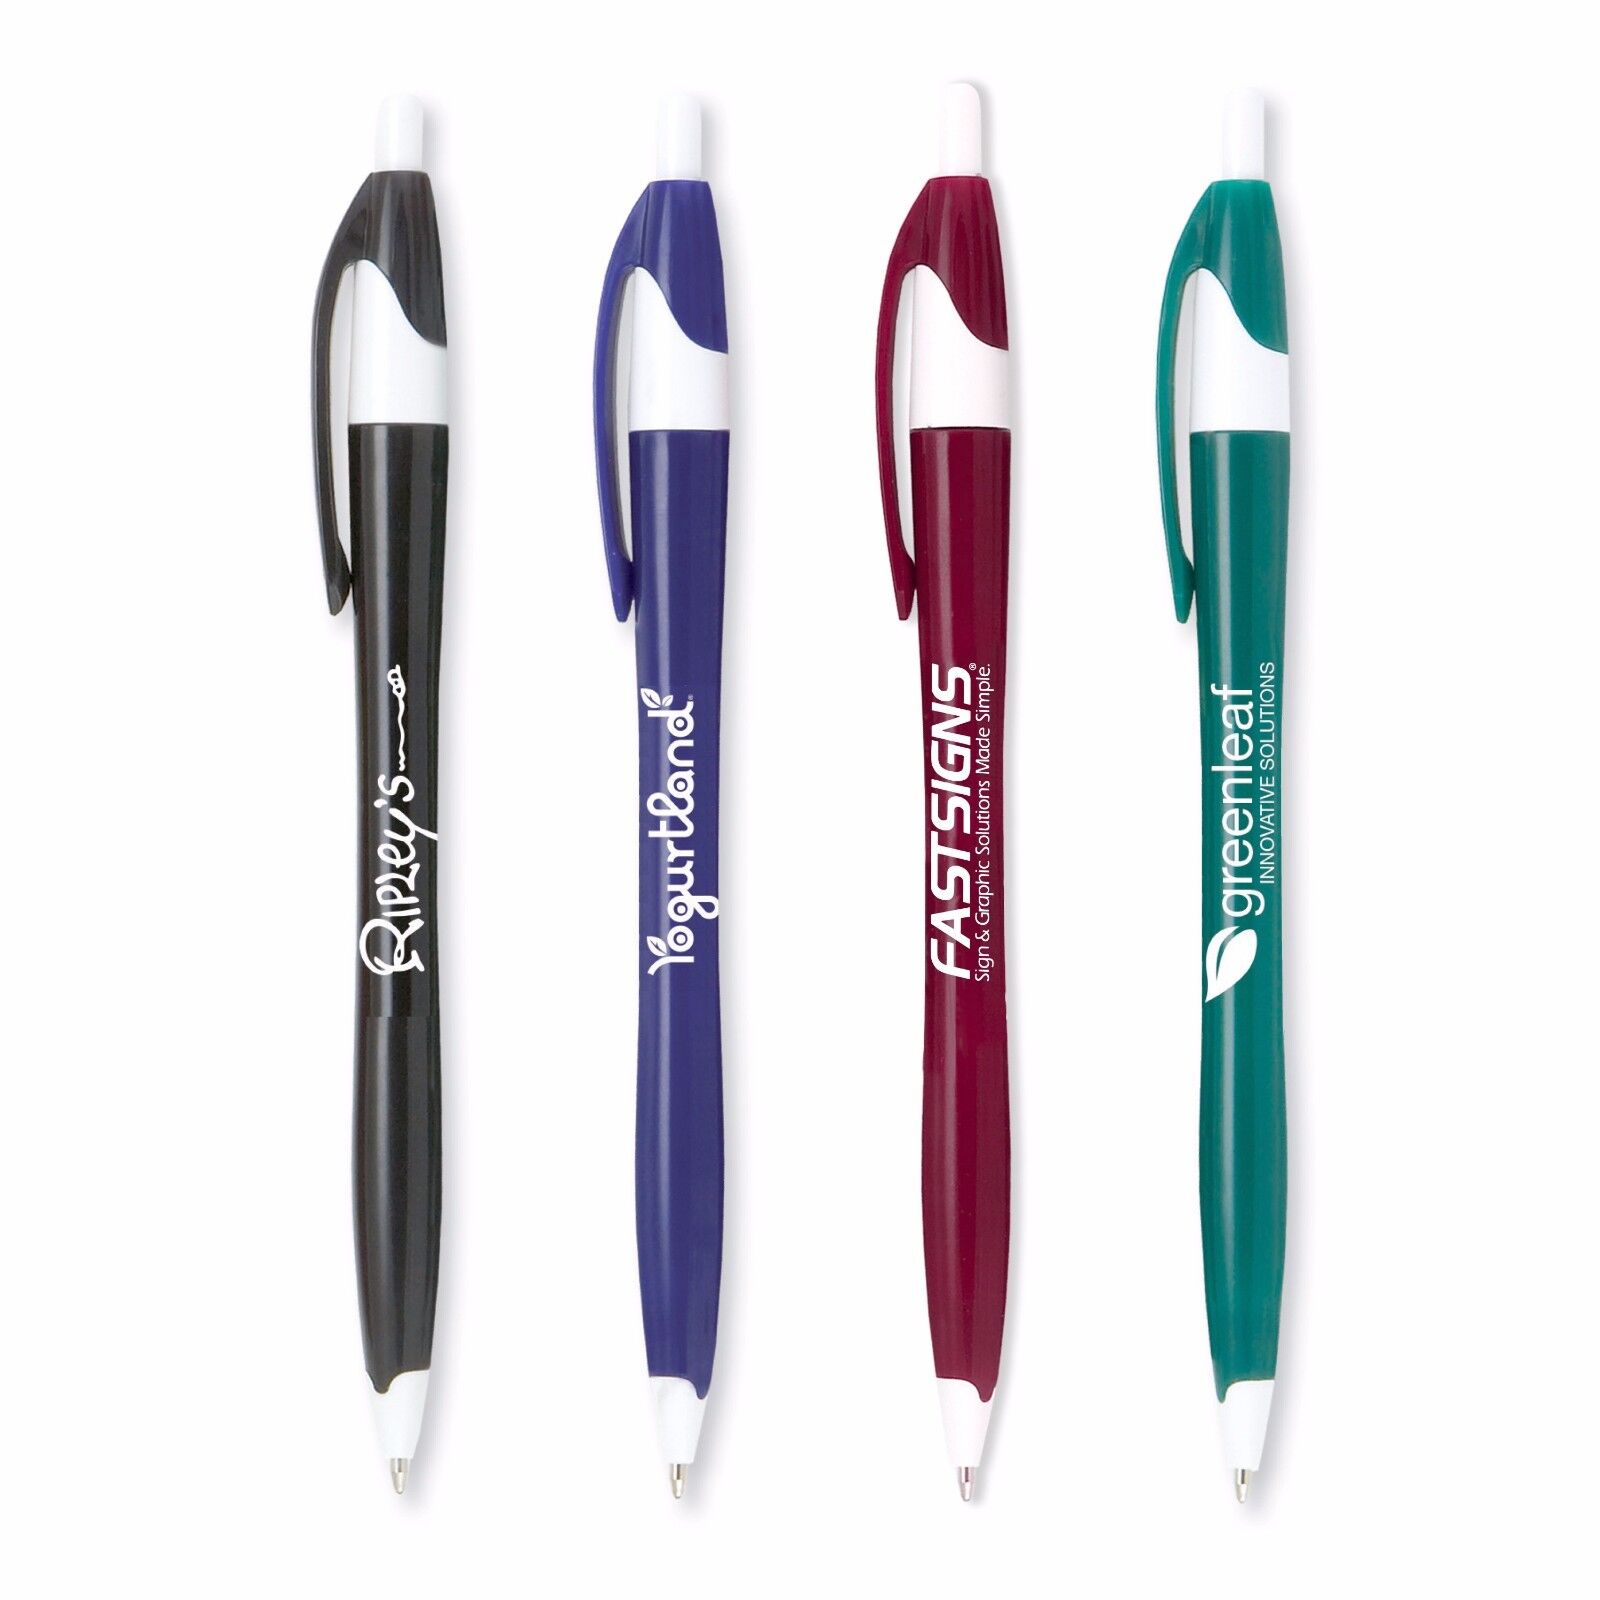 300- Promotional Pens - Personalized Custom Imprinted. Без бренда - фотография #4